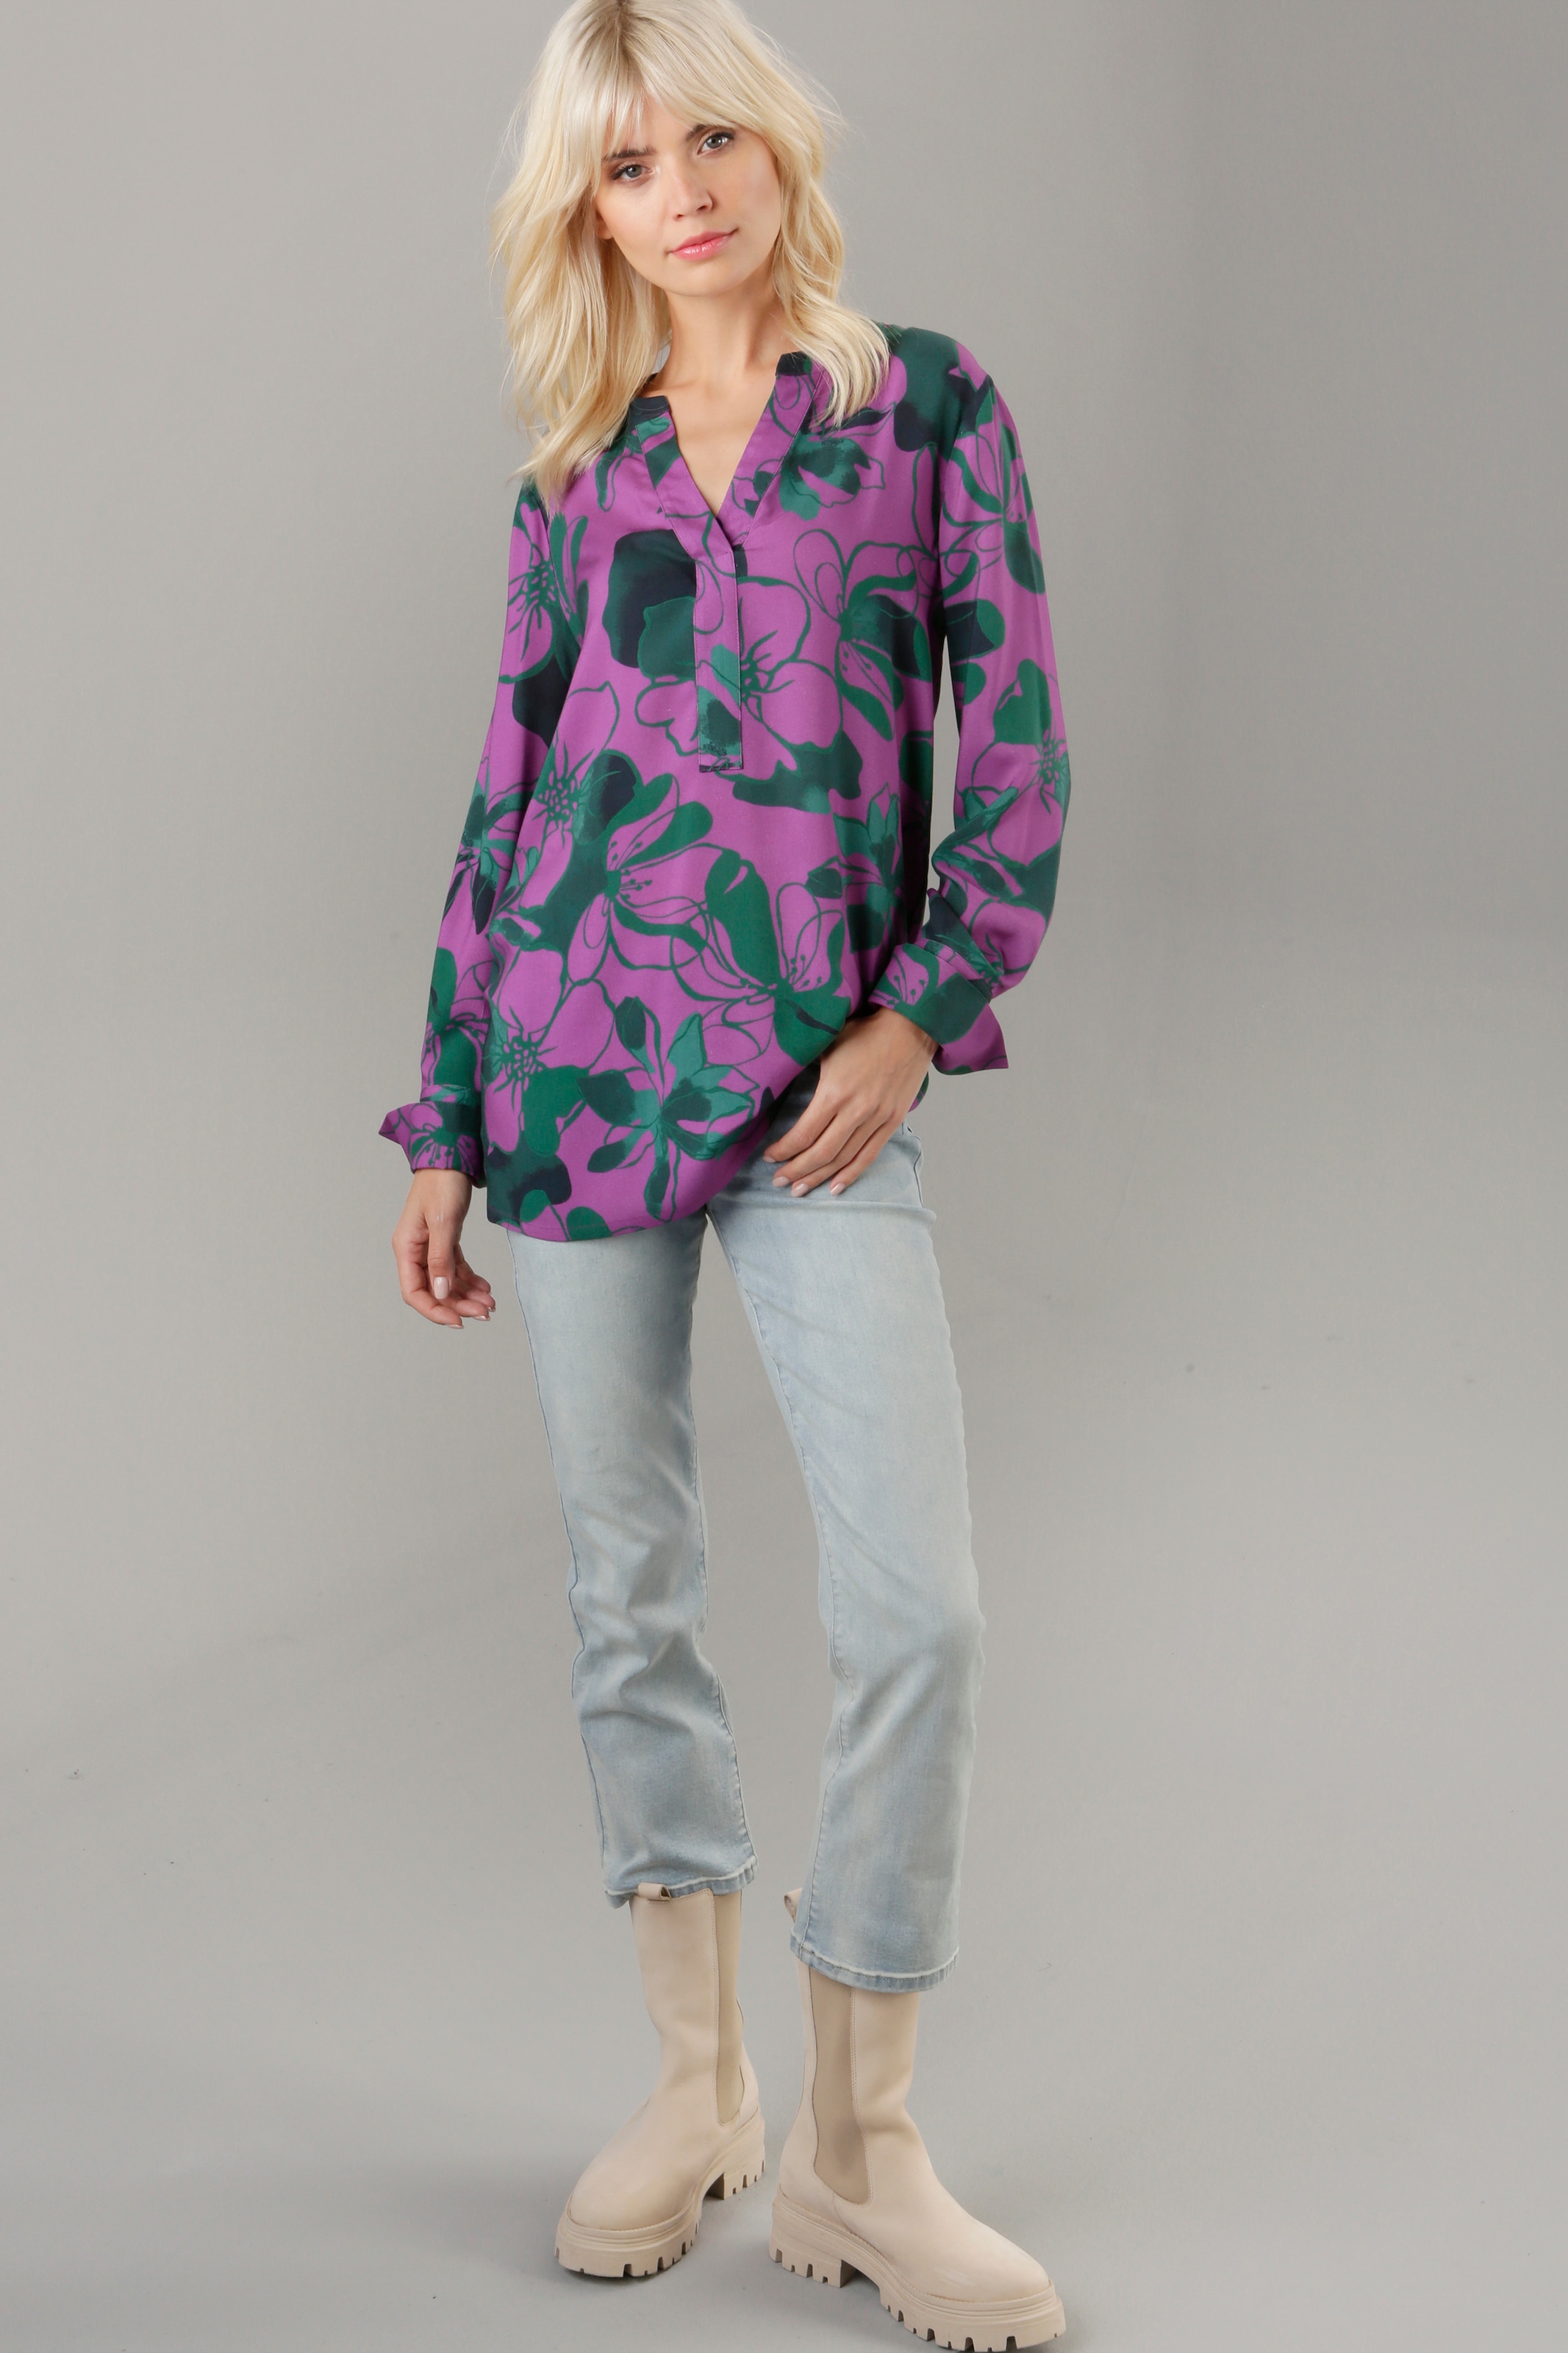 Aniston SELECTED Longbluse, mit Blütendruck in aufregender Farbkombination  bestellen bei OTTO